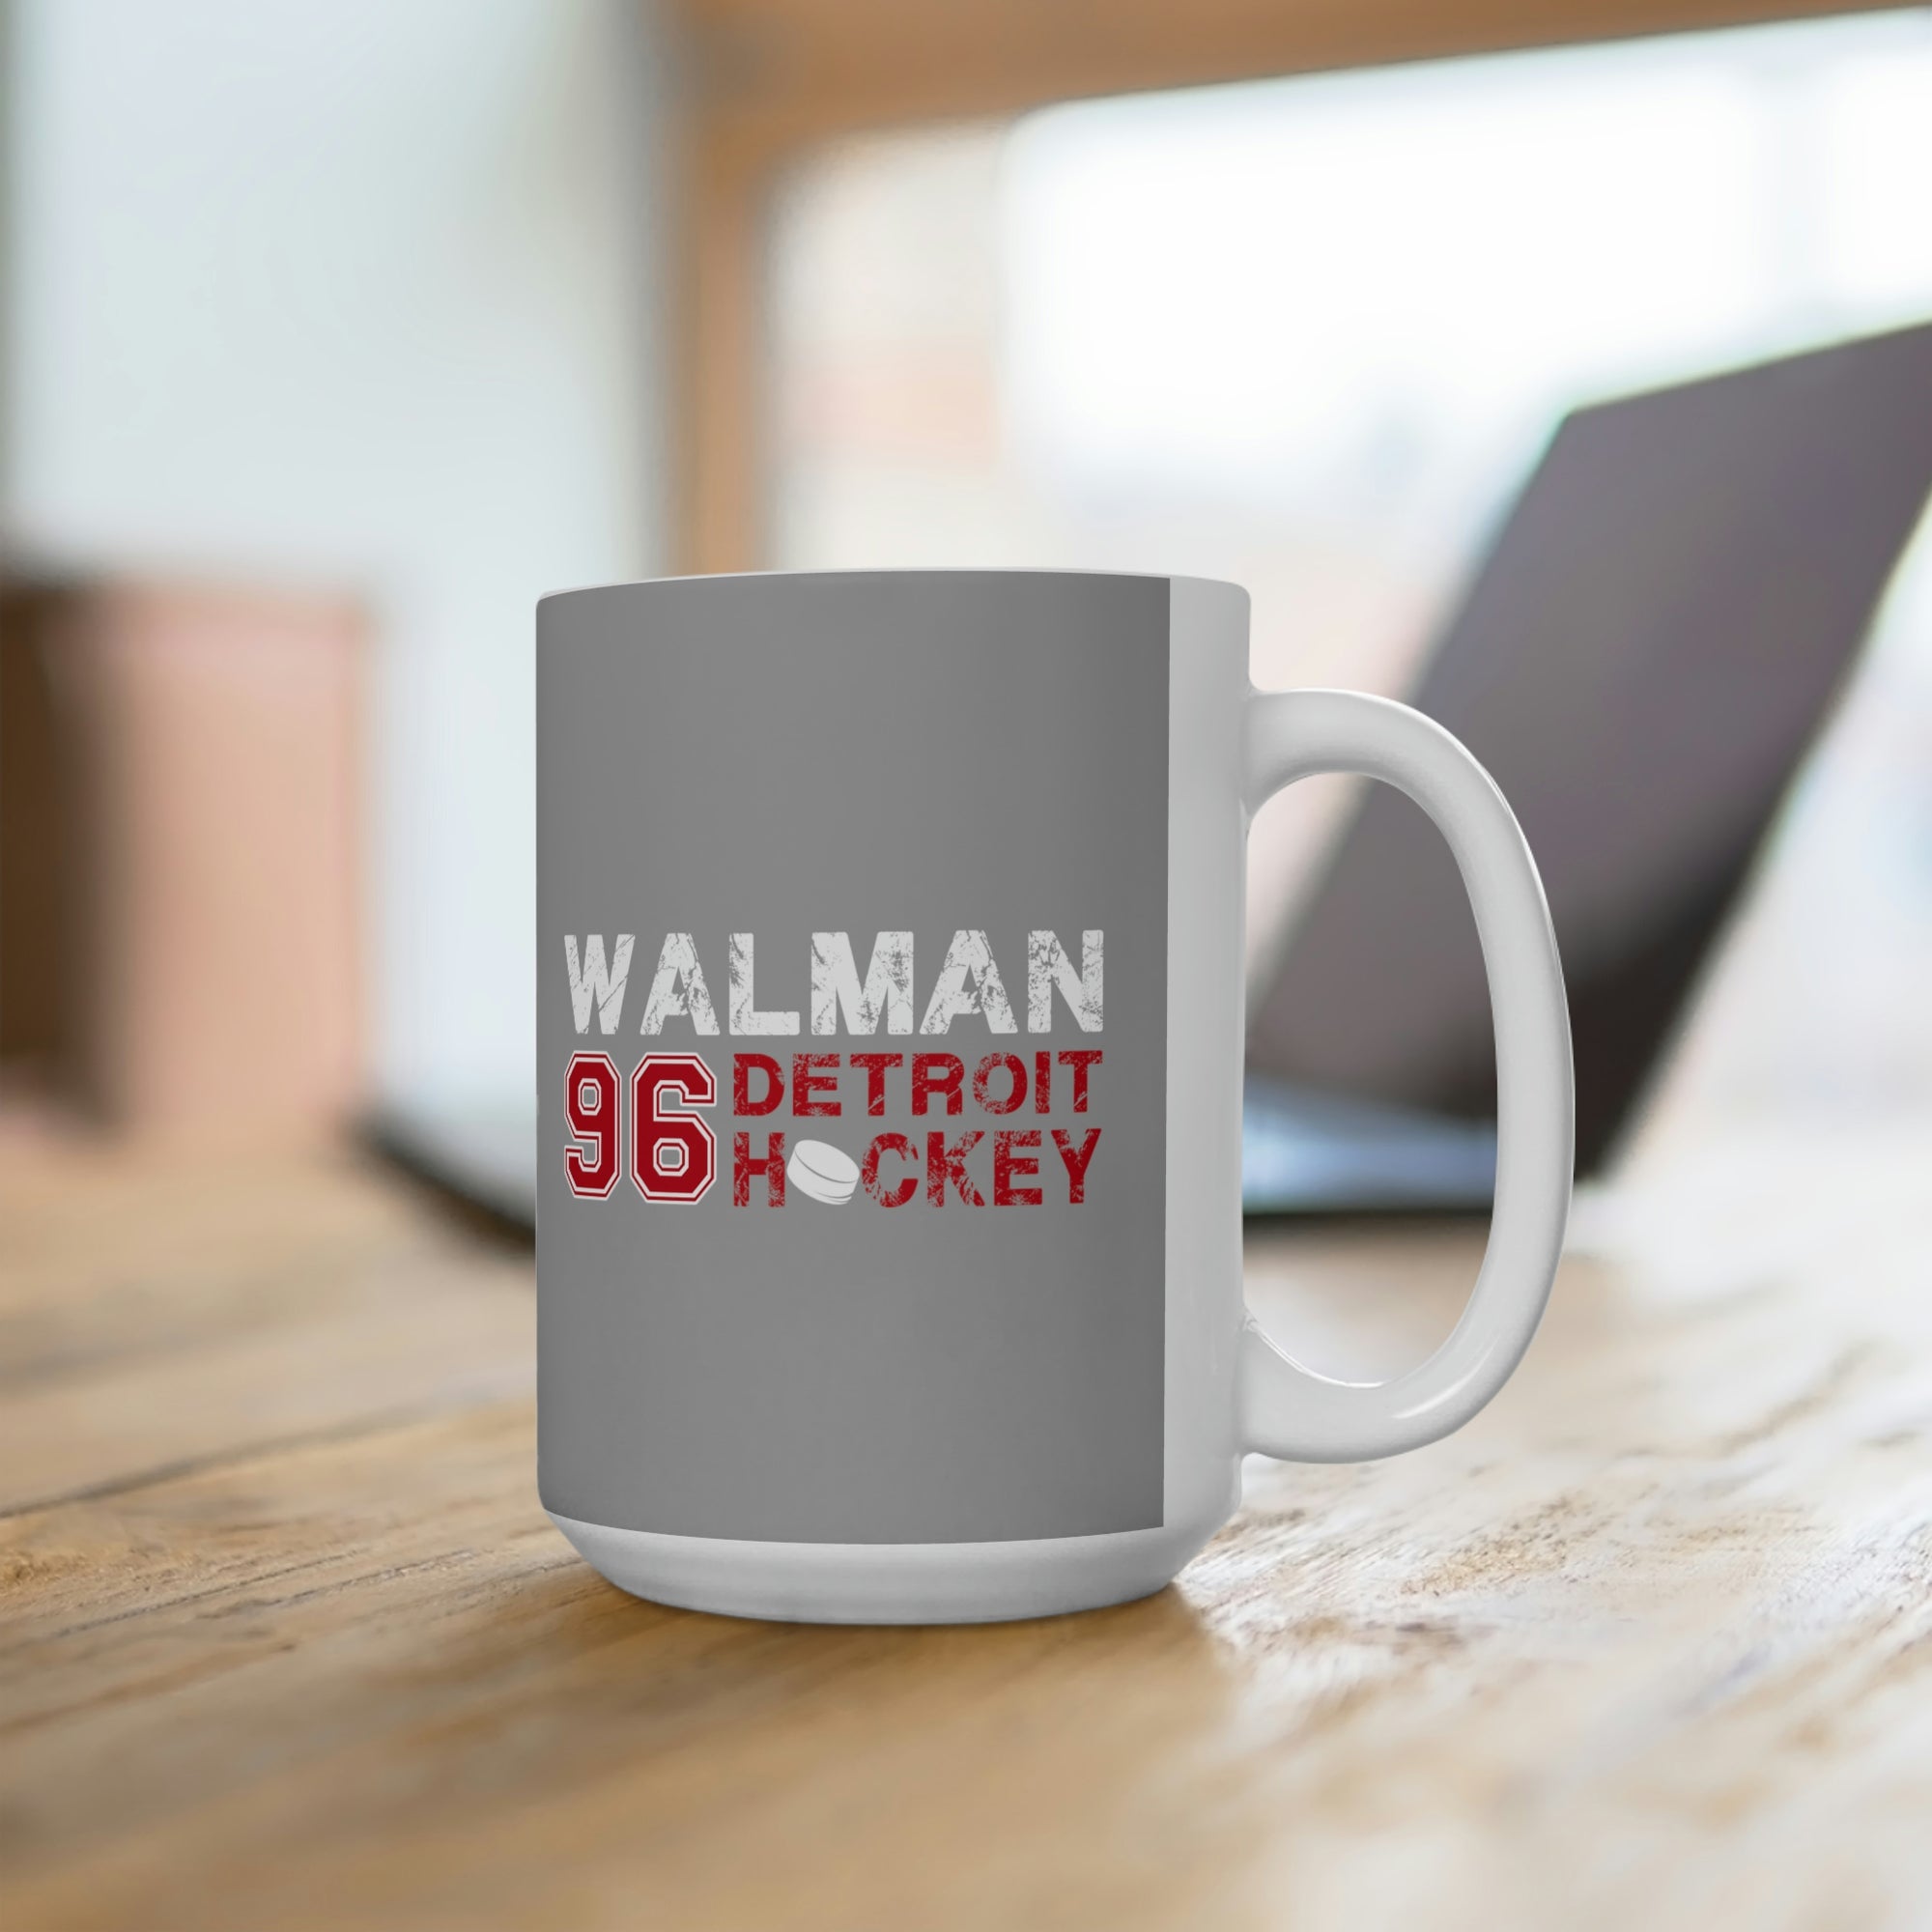 Walman 96 Detroit Hockey Ceramic Coffee Mug In Gray, 15oz